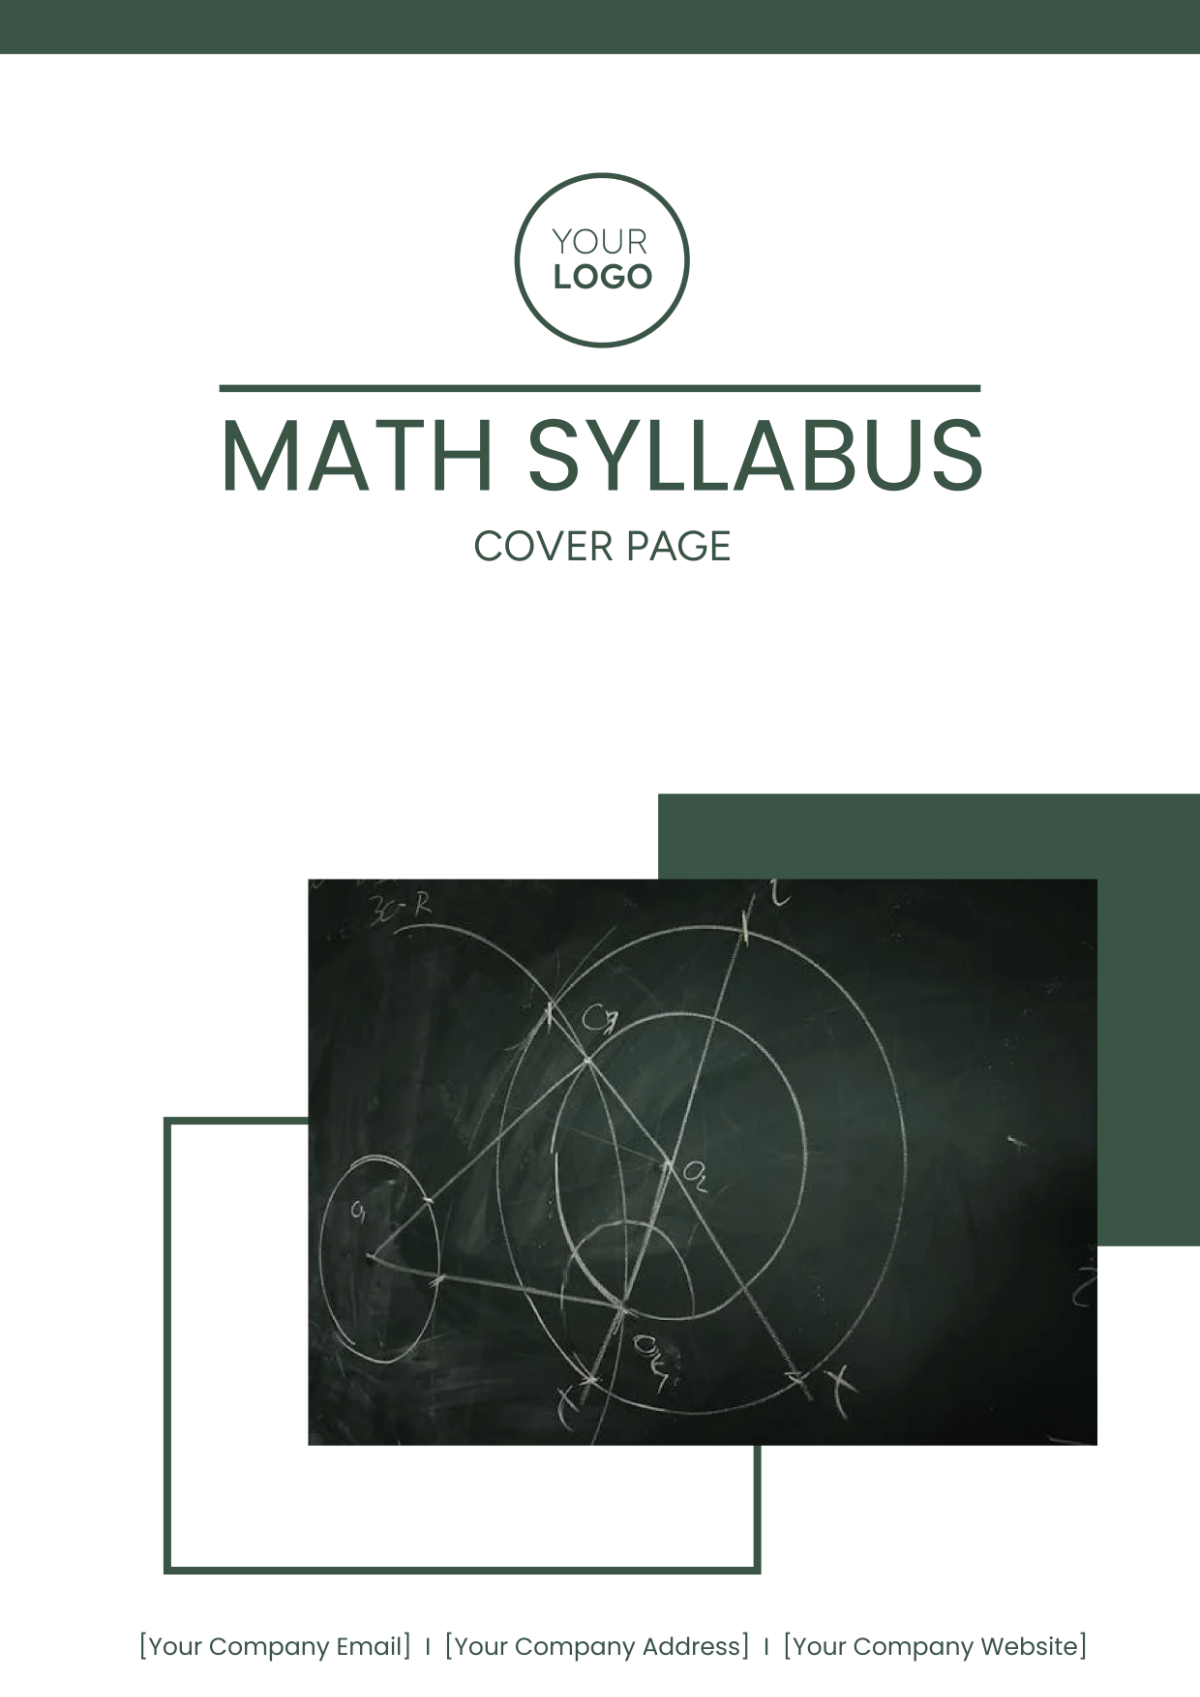 Math Syllabus Cover Page